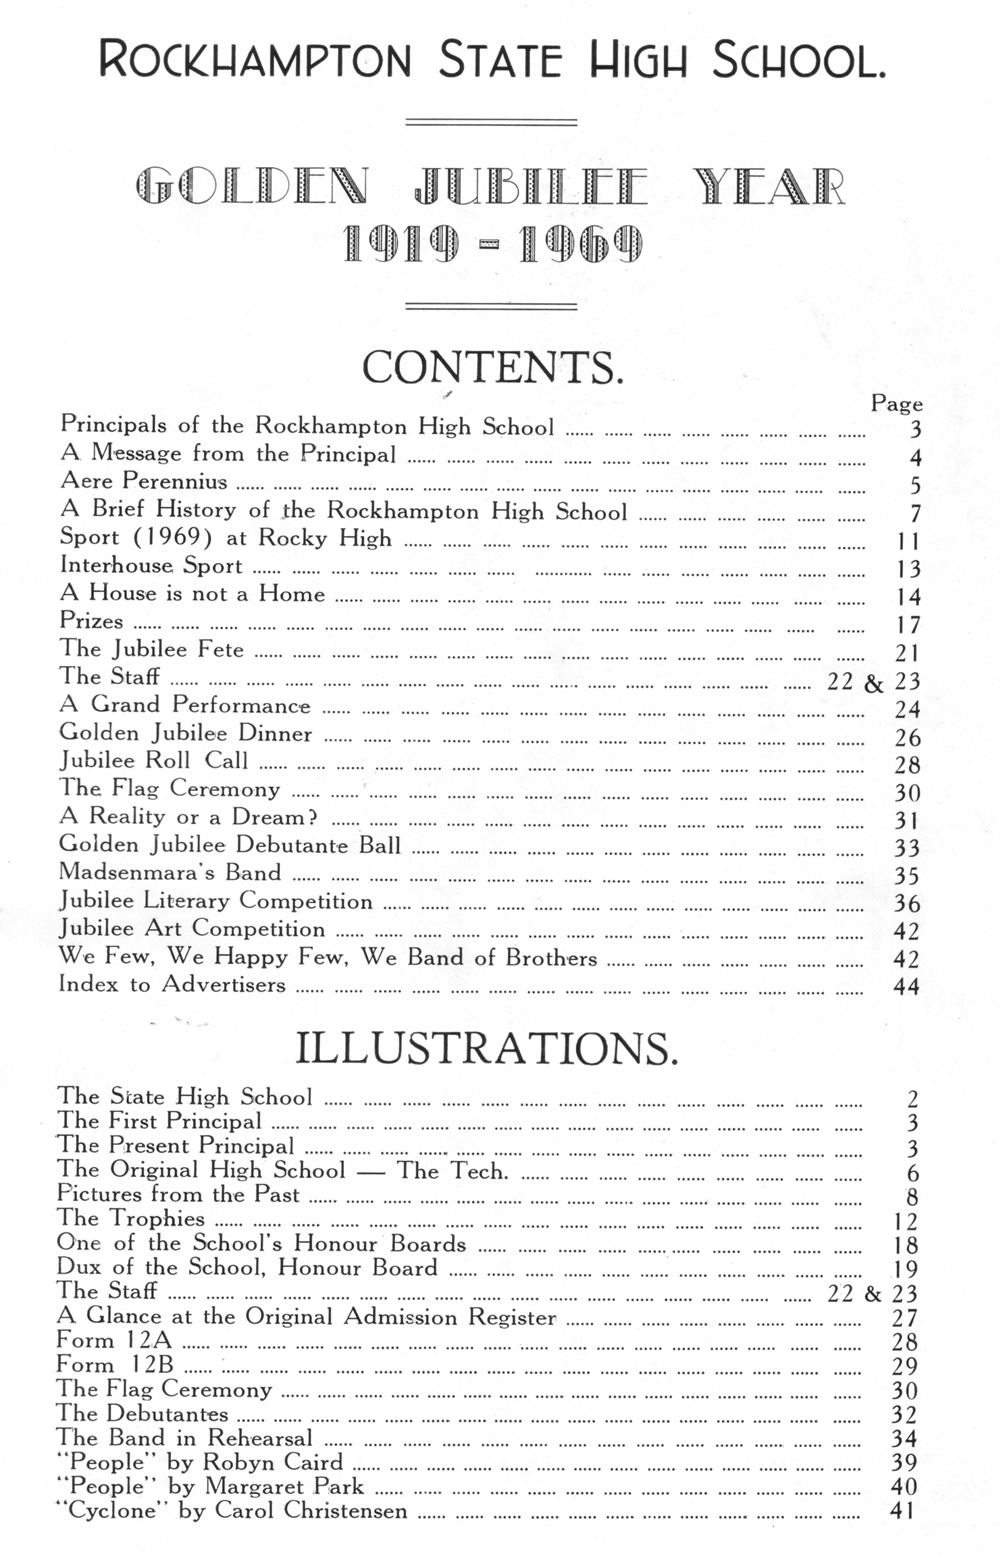 1969 Rockhampton State High School Magazine contents